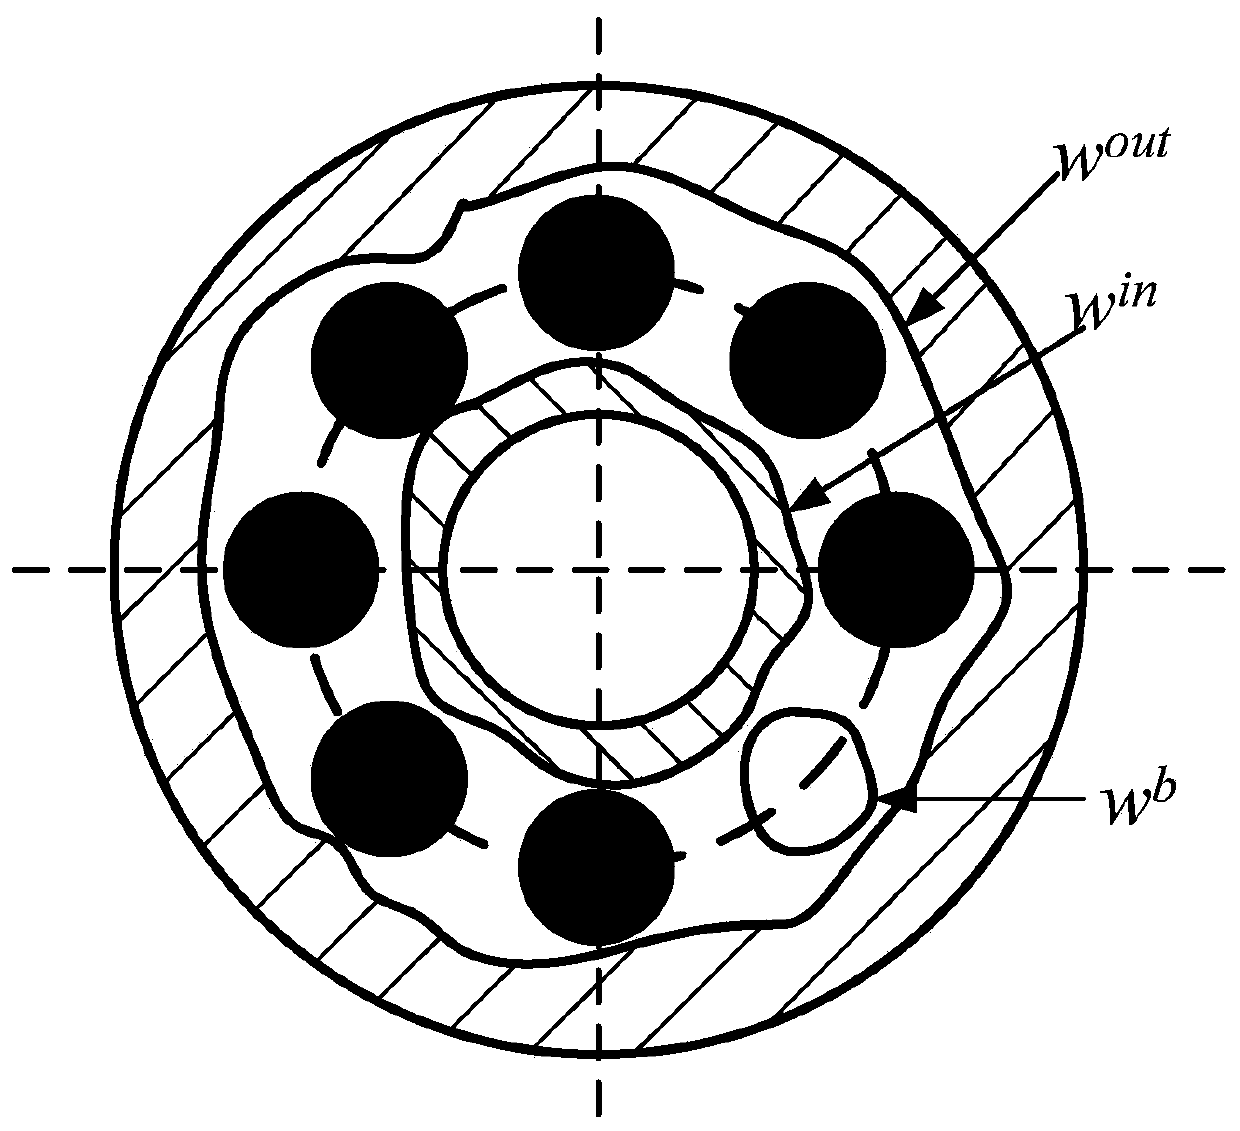 Planetary bearing distributed fault diagnosis and analysis method based on instantaneous angular velocity